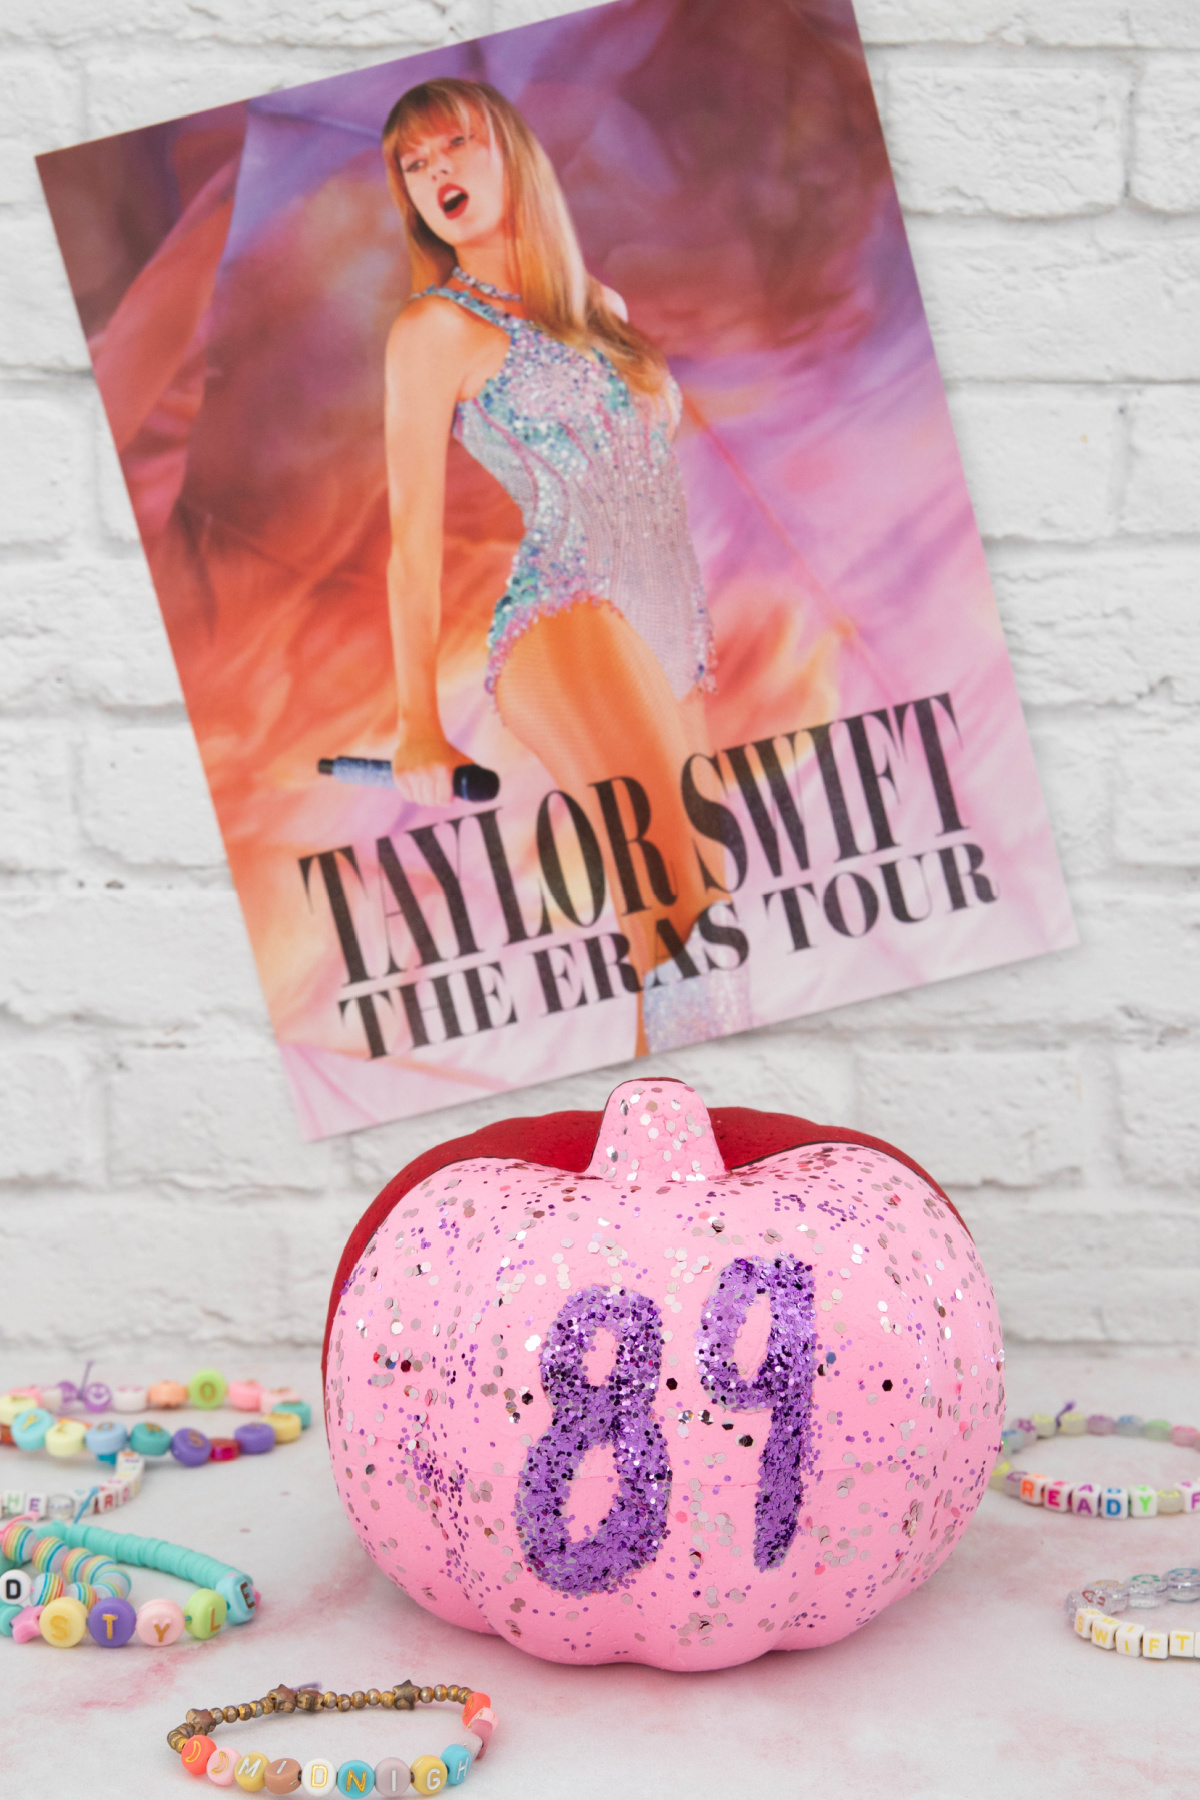 Pink Taylor Swift Pumpkin with Eras tour poster